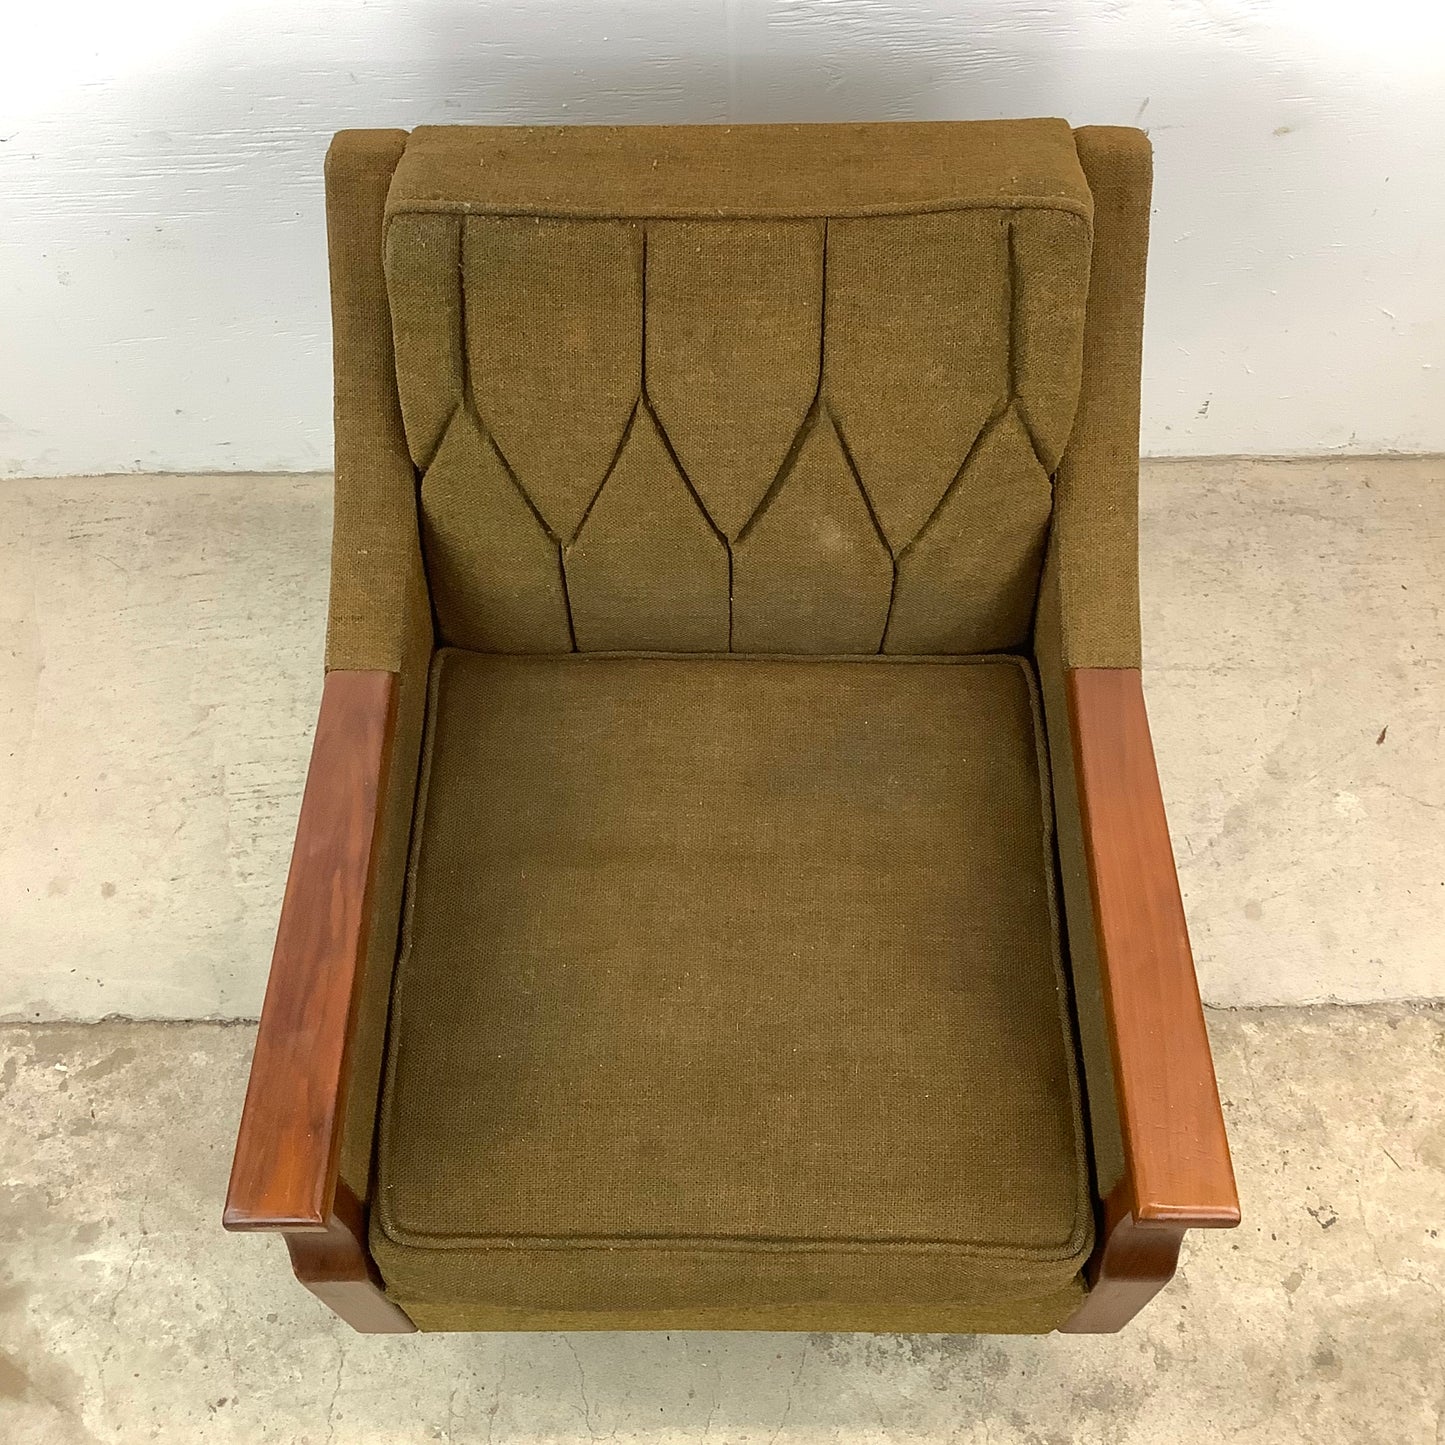 Mid-Century Lounge Chair